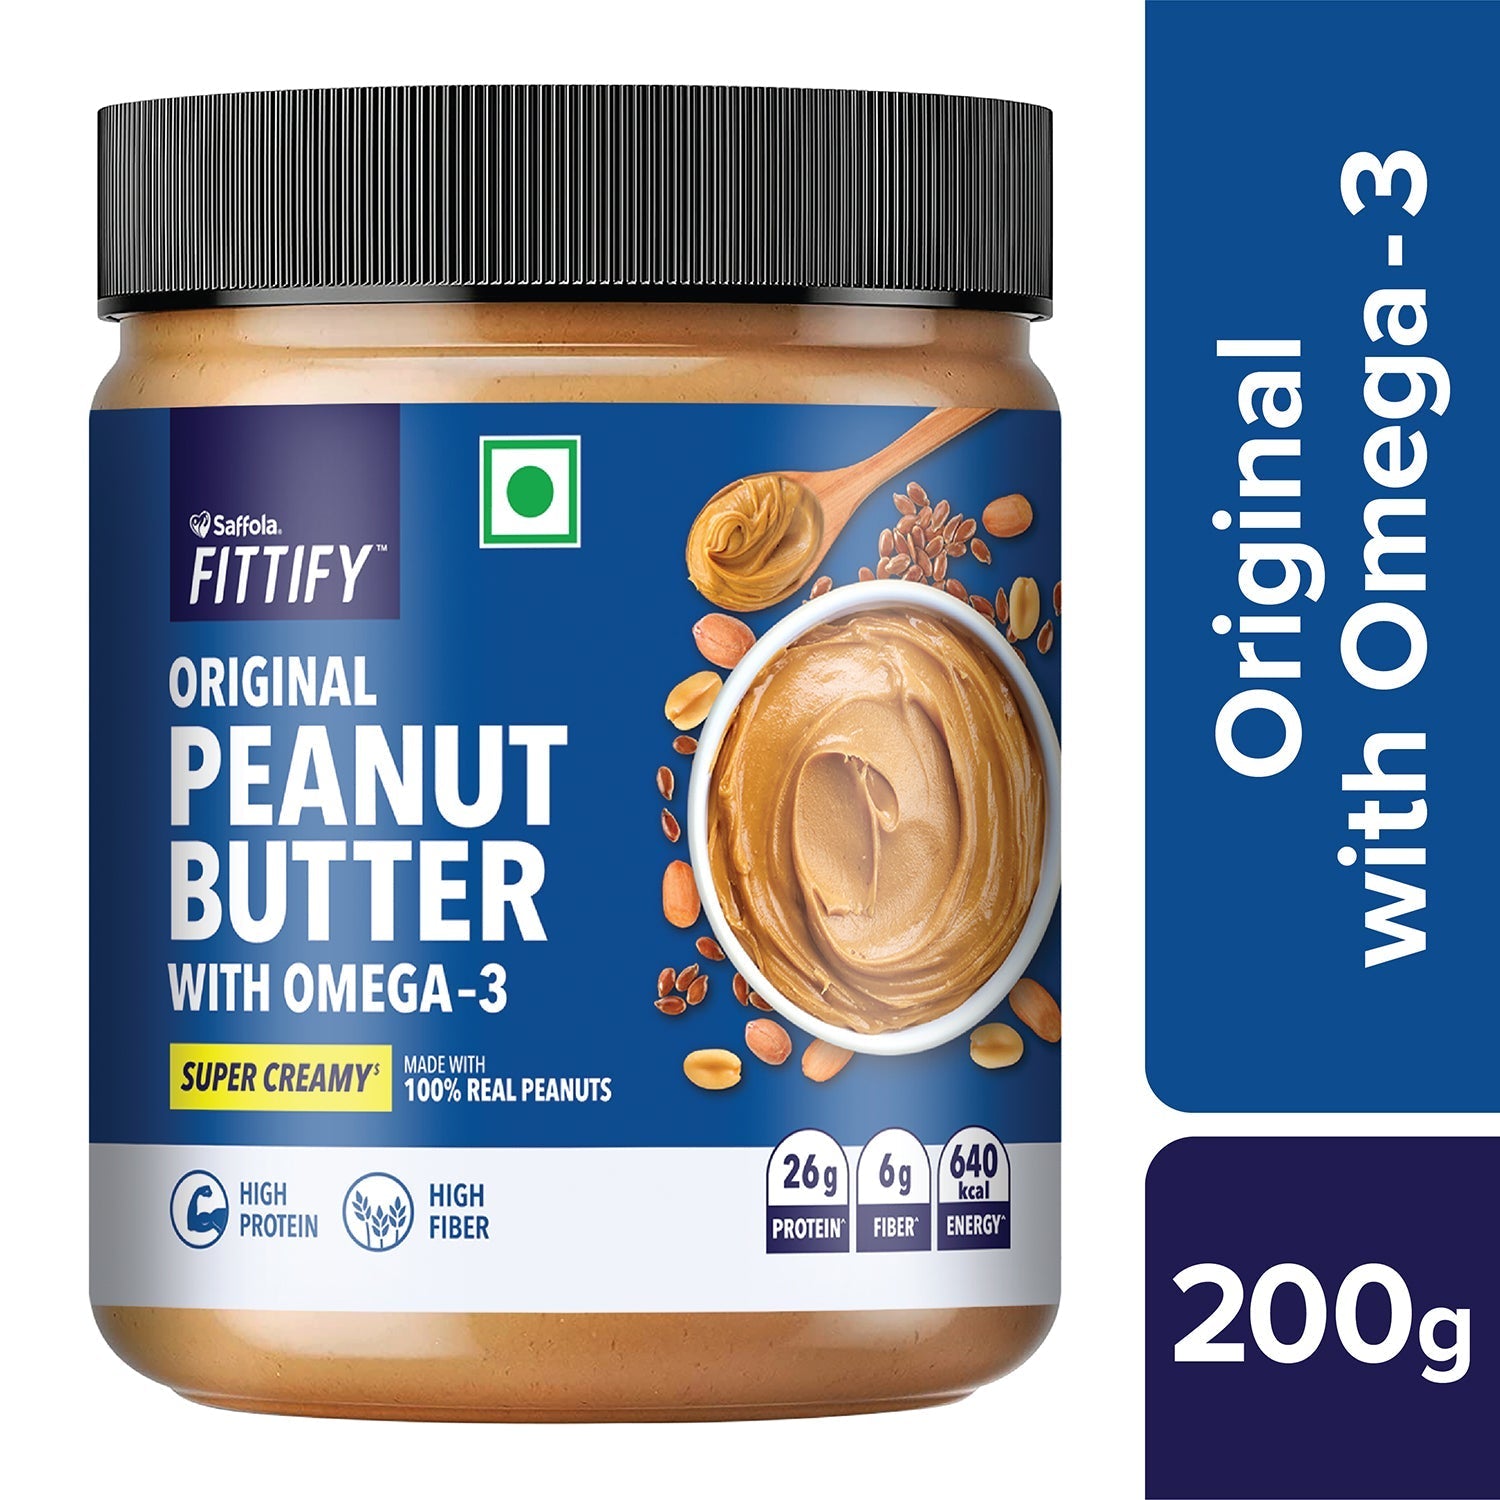 [CRED] Saffola Fittify Original - Omega 3 - Peanut Butter